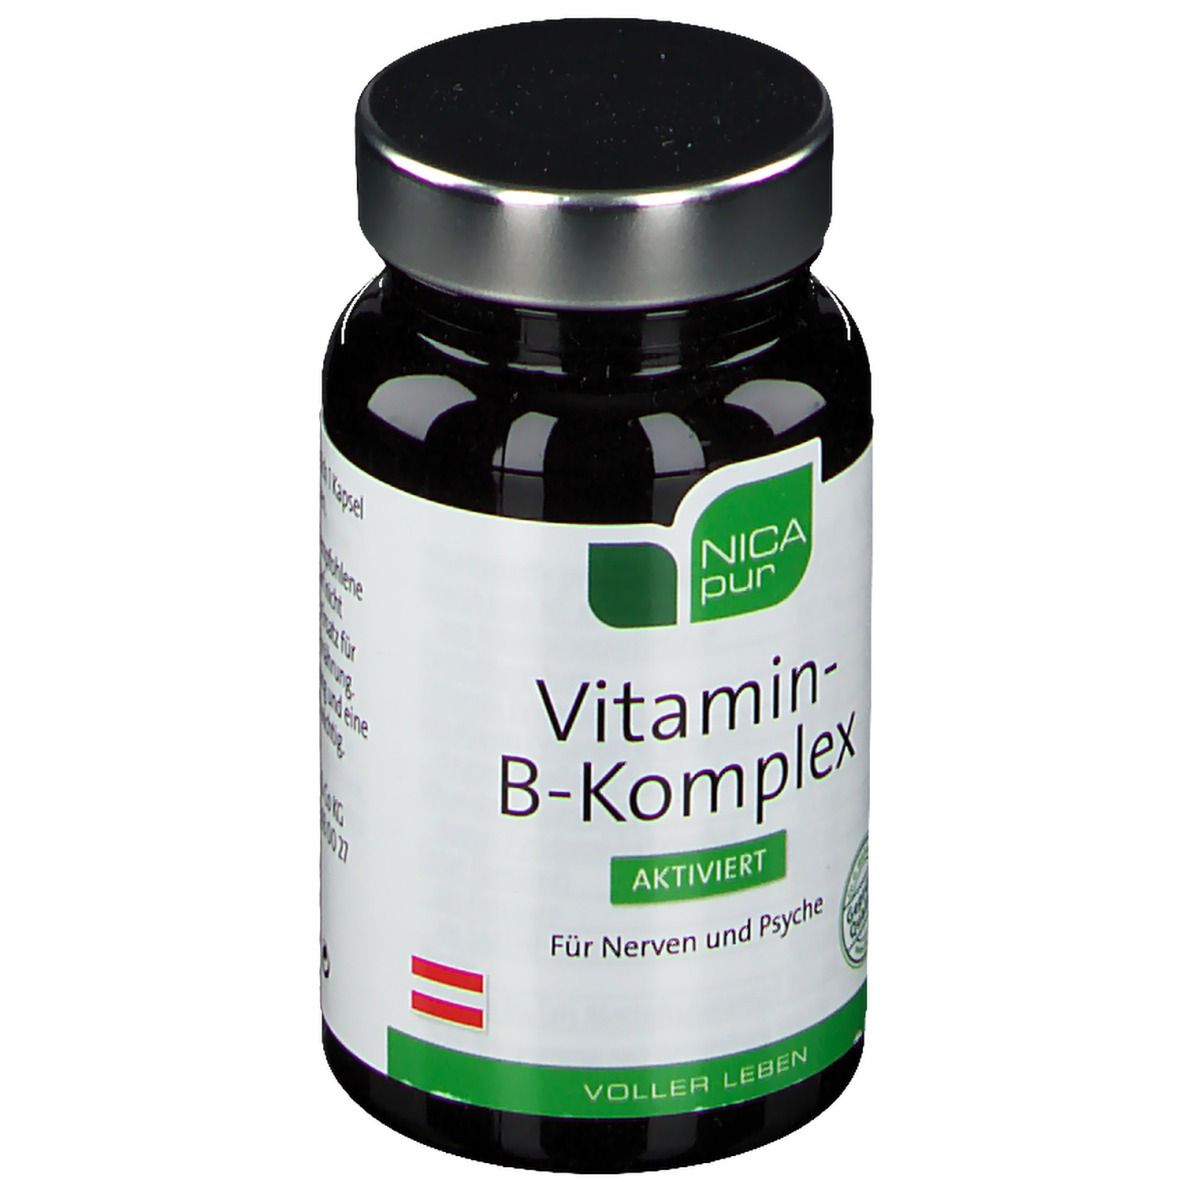 NICApur® Vitamin-B-Komplex aktiviert